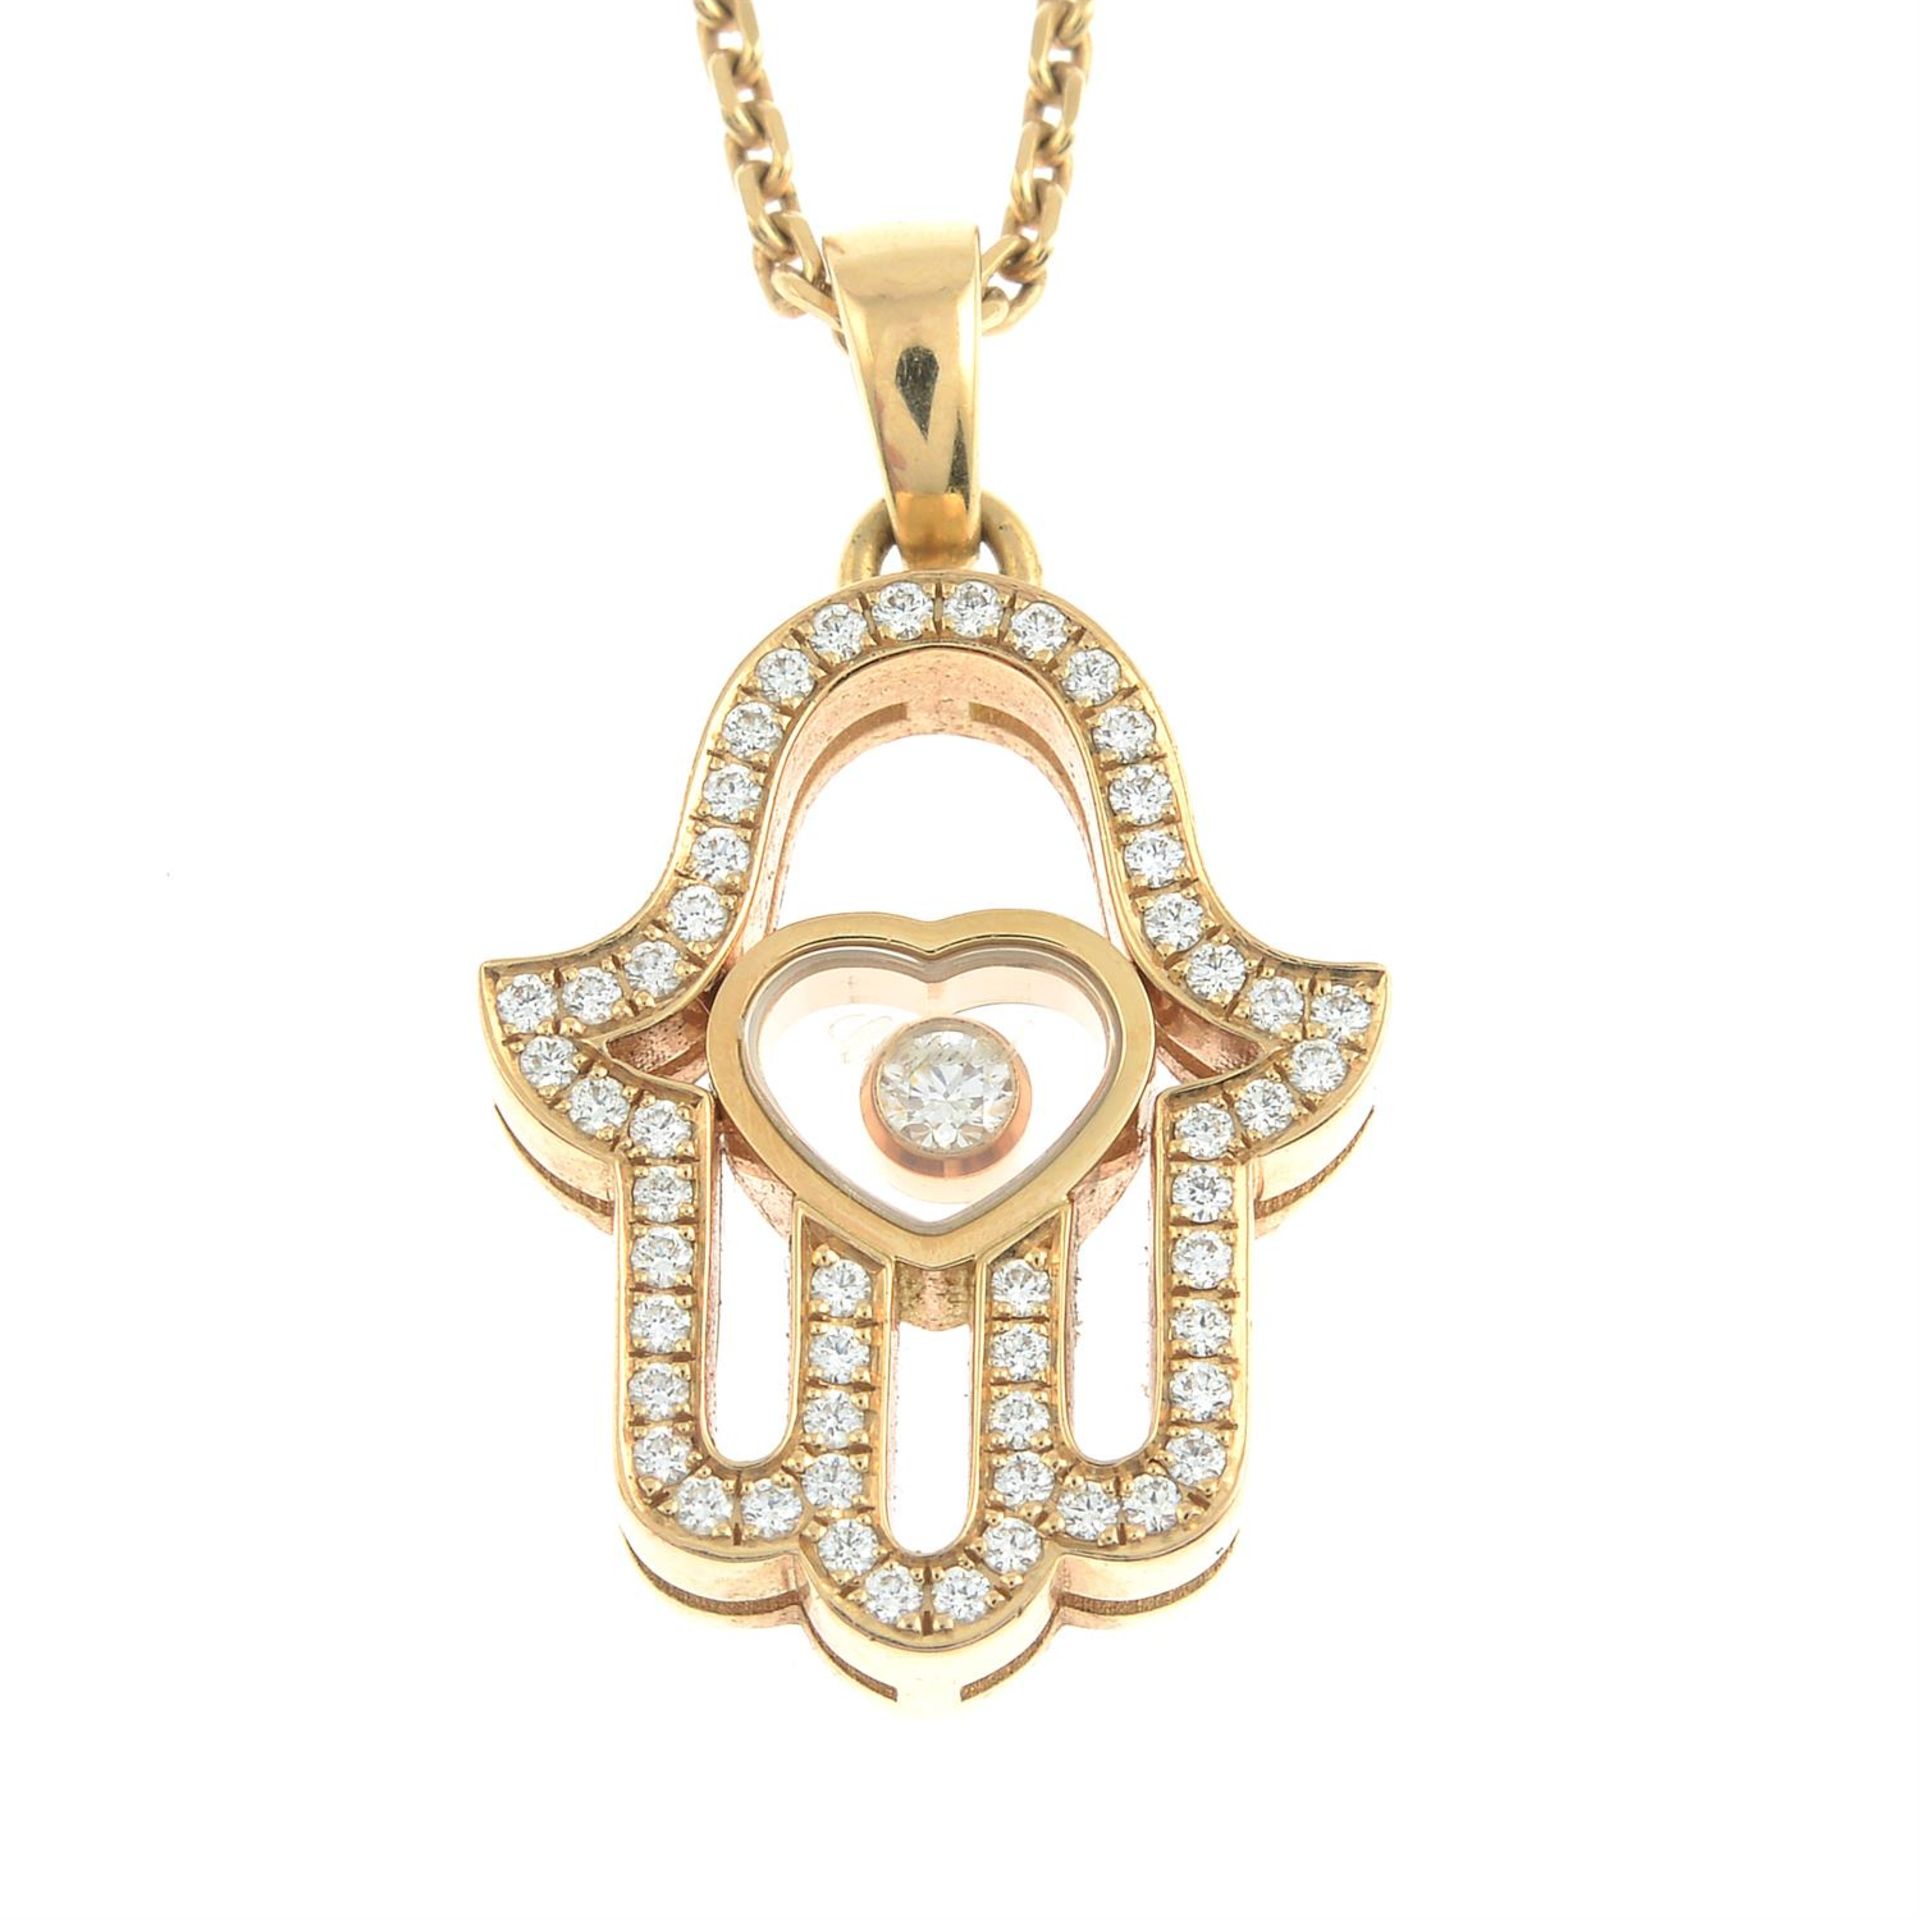 An 18ct gold brilliant-cut diamond 'Happy Diamonds' Hamsa Hand pendant, with chain, by Chopard. - Image 2 of 5